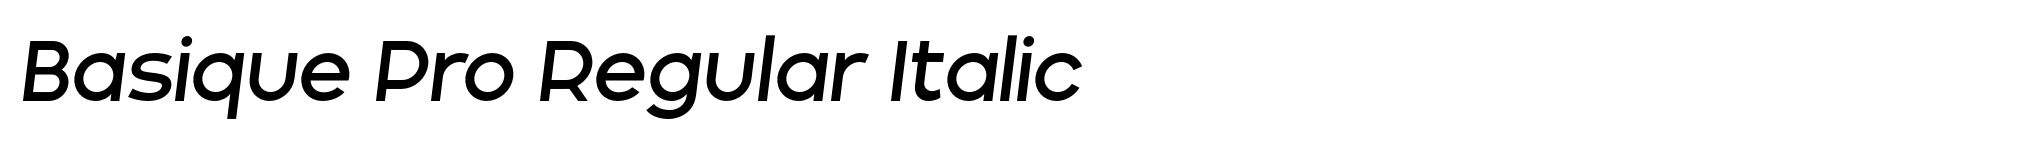 Basique Pro Regular Italic image